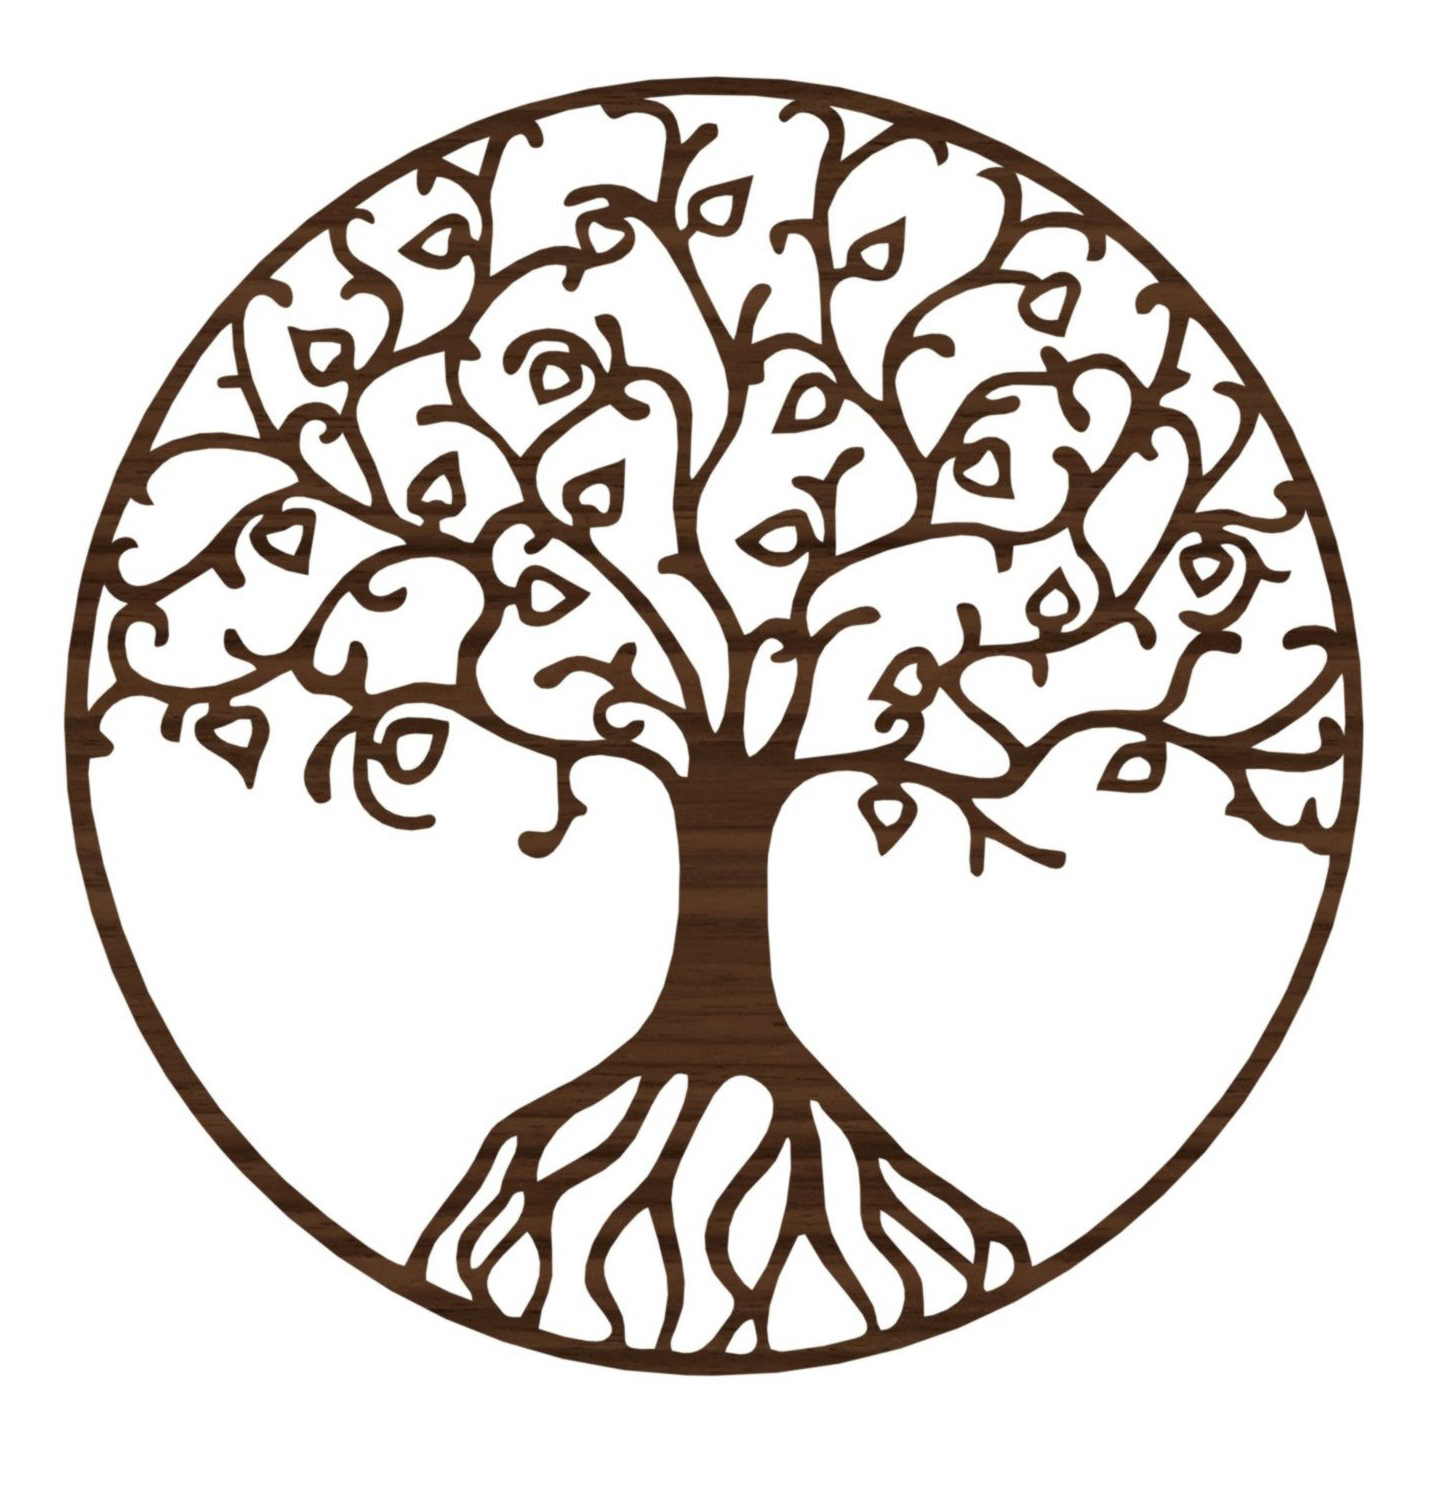 Знак дерево жизни. "Tree of Life" ("дерево жизни") by degree. Дерево в круге. Дерево символ.